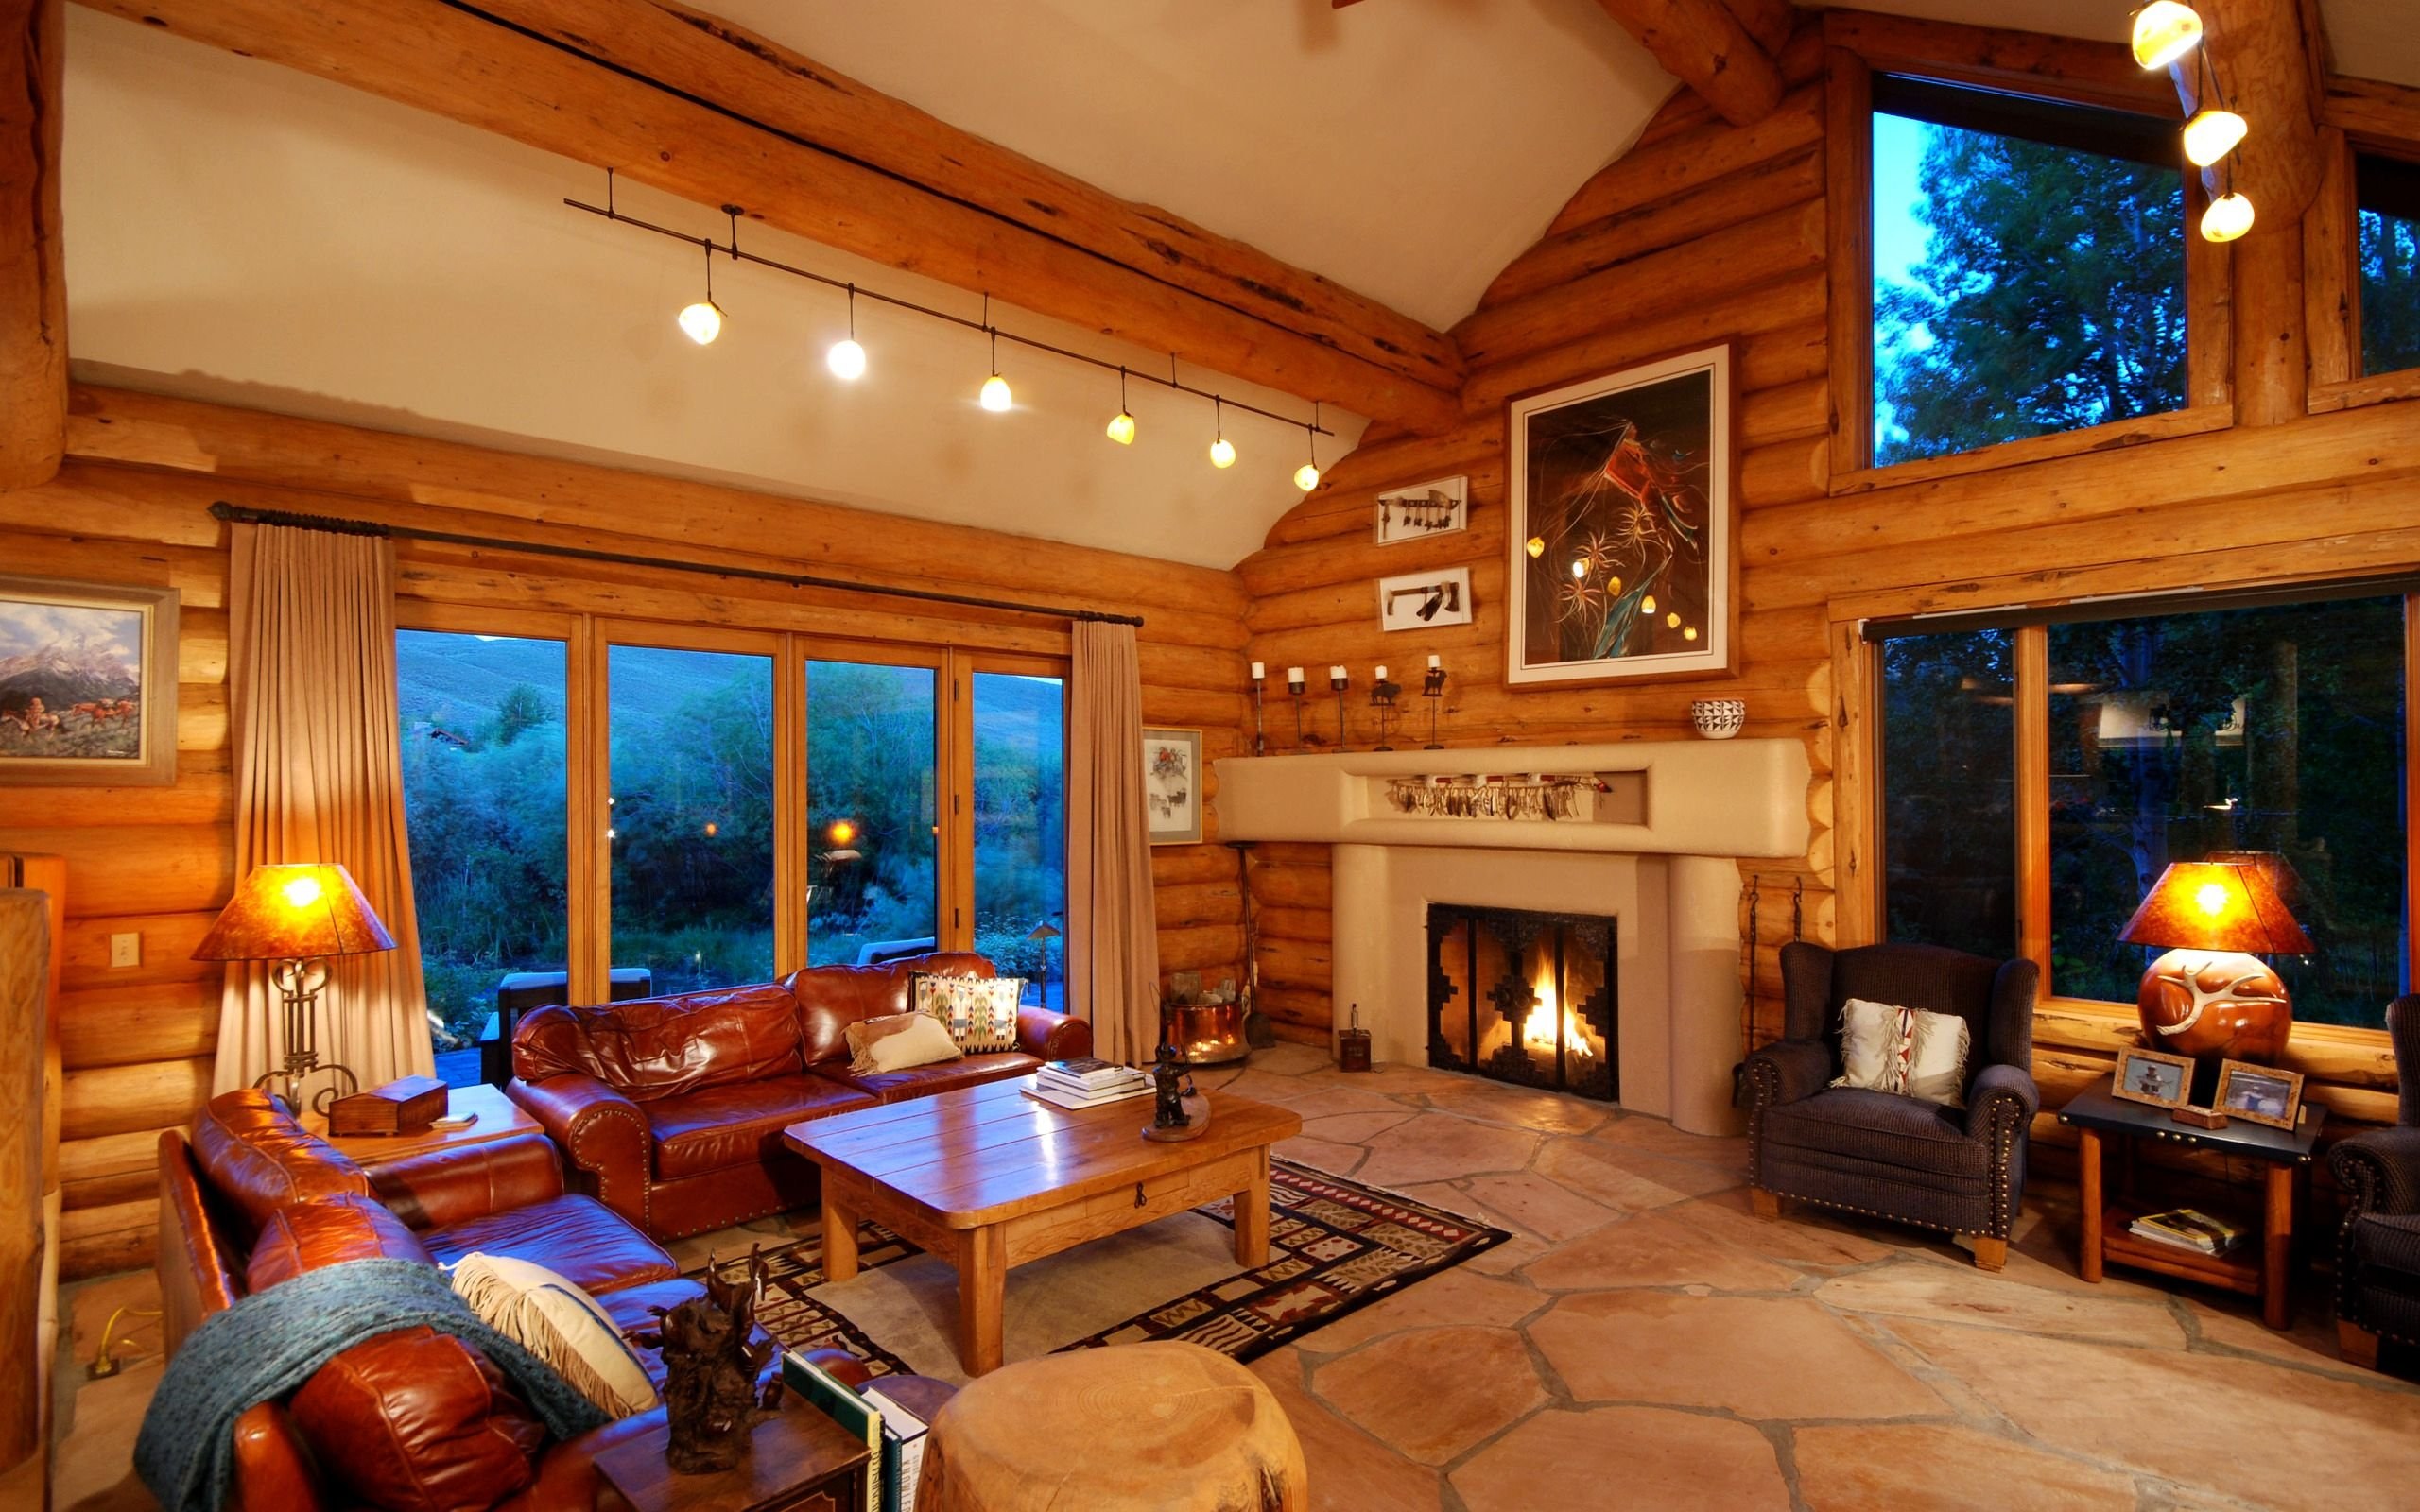 〚 16 cozy interiors with a fireplace 〛◾ Photos ◾ Ideas ◾ Design